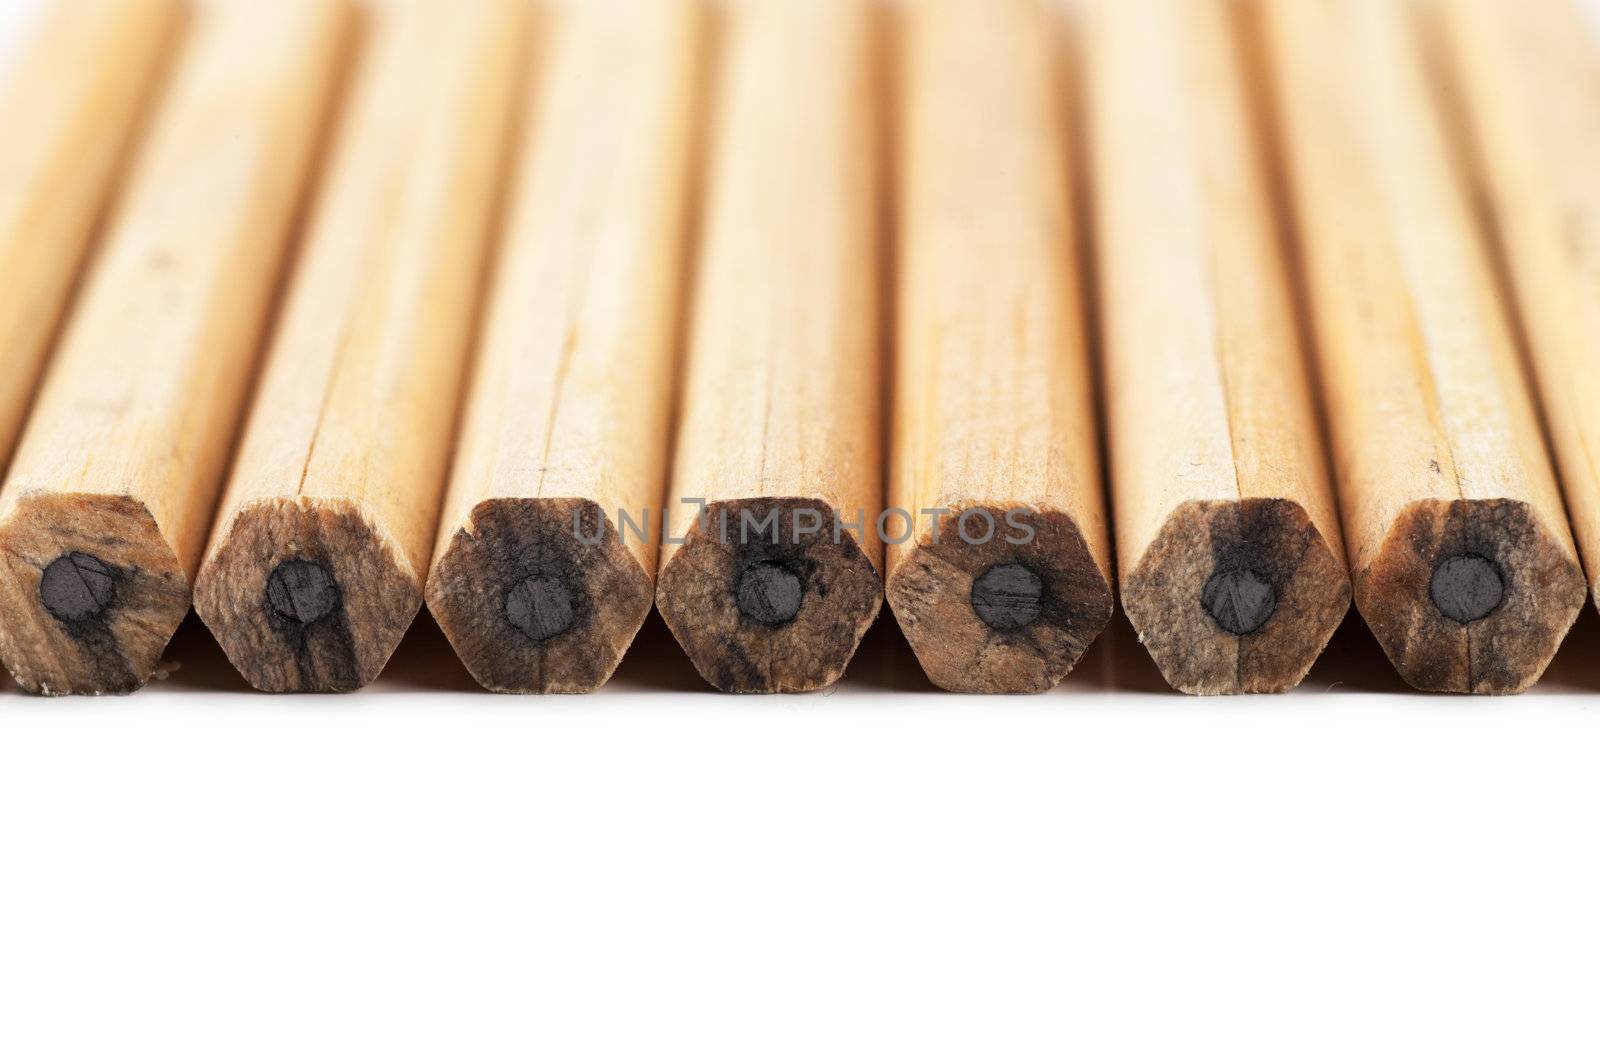 Lead pencils by AGorohov